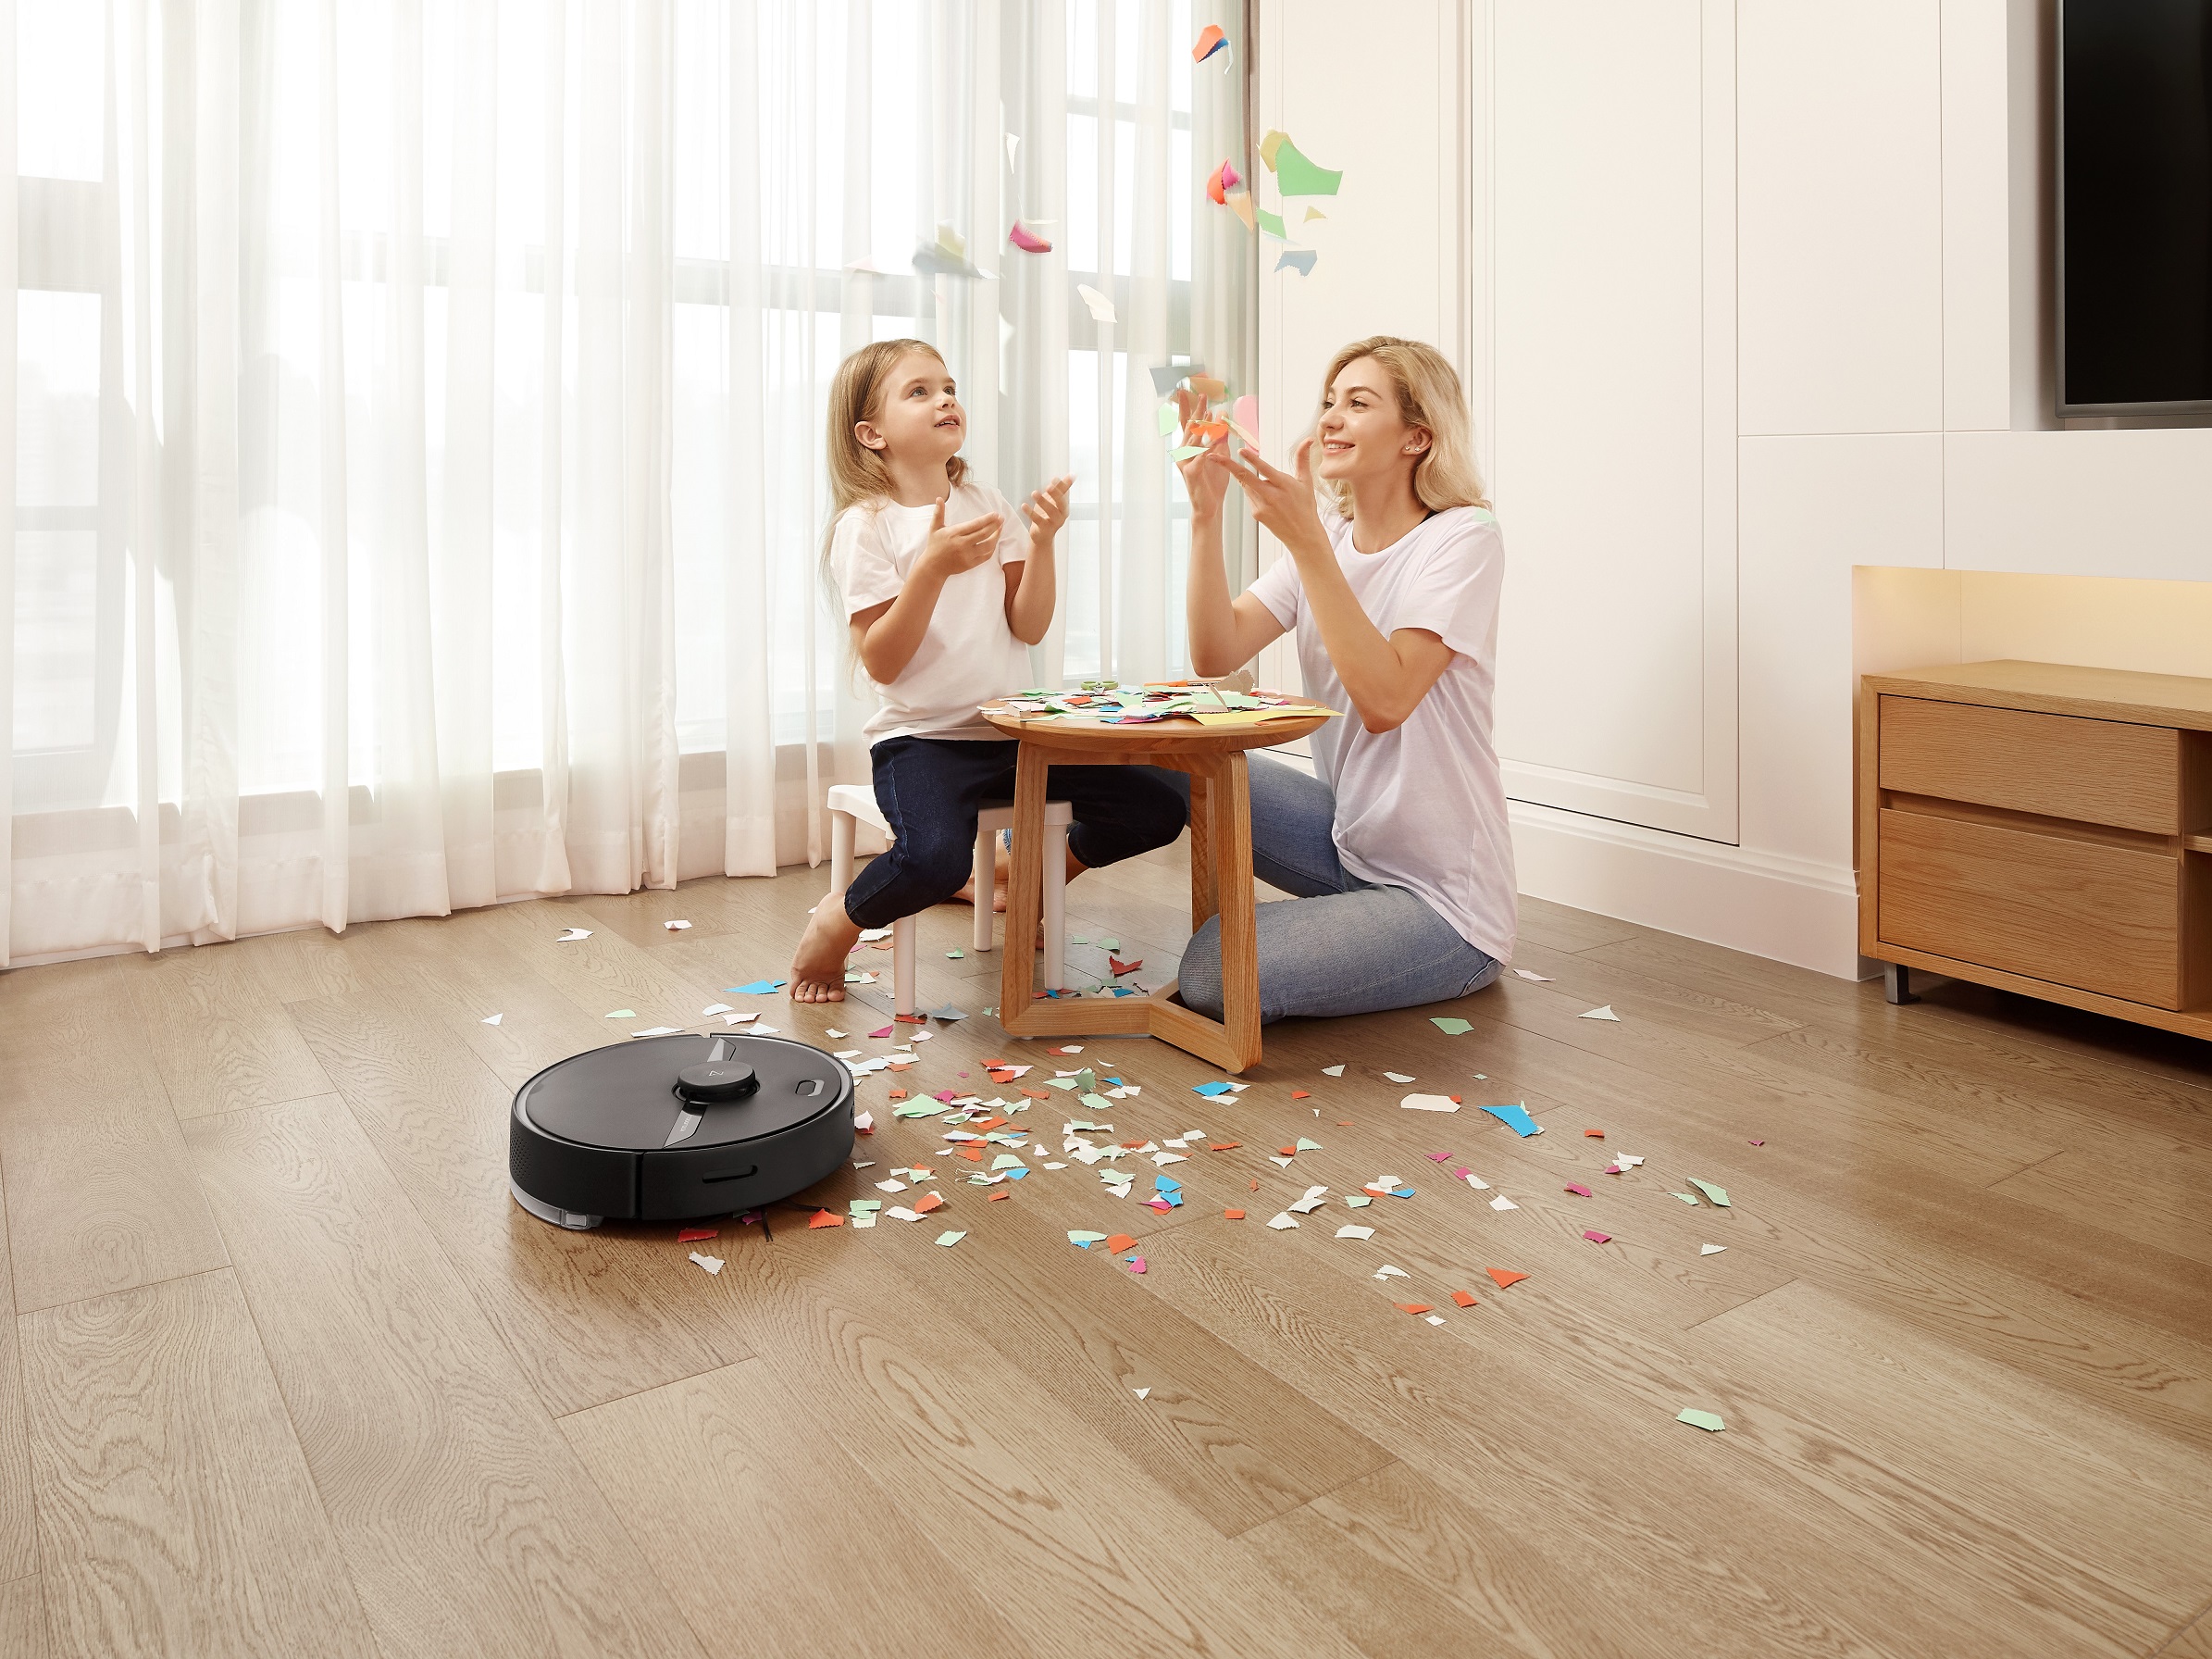 Roomba vs. Roborock: Which vacuum better? | Digital Trends